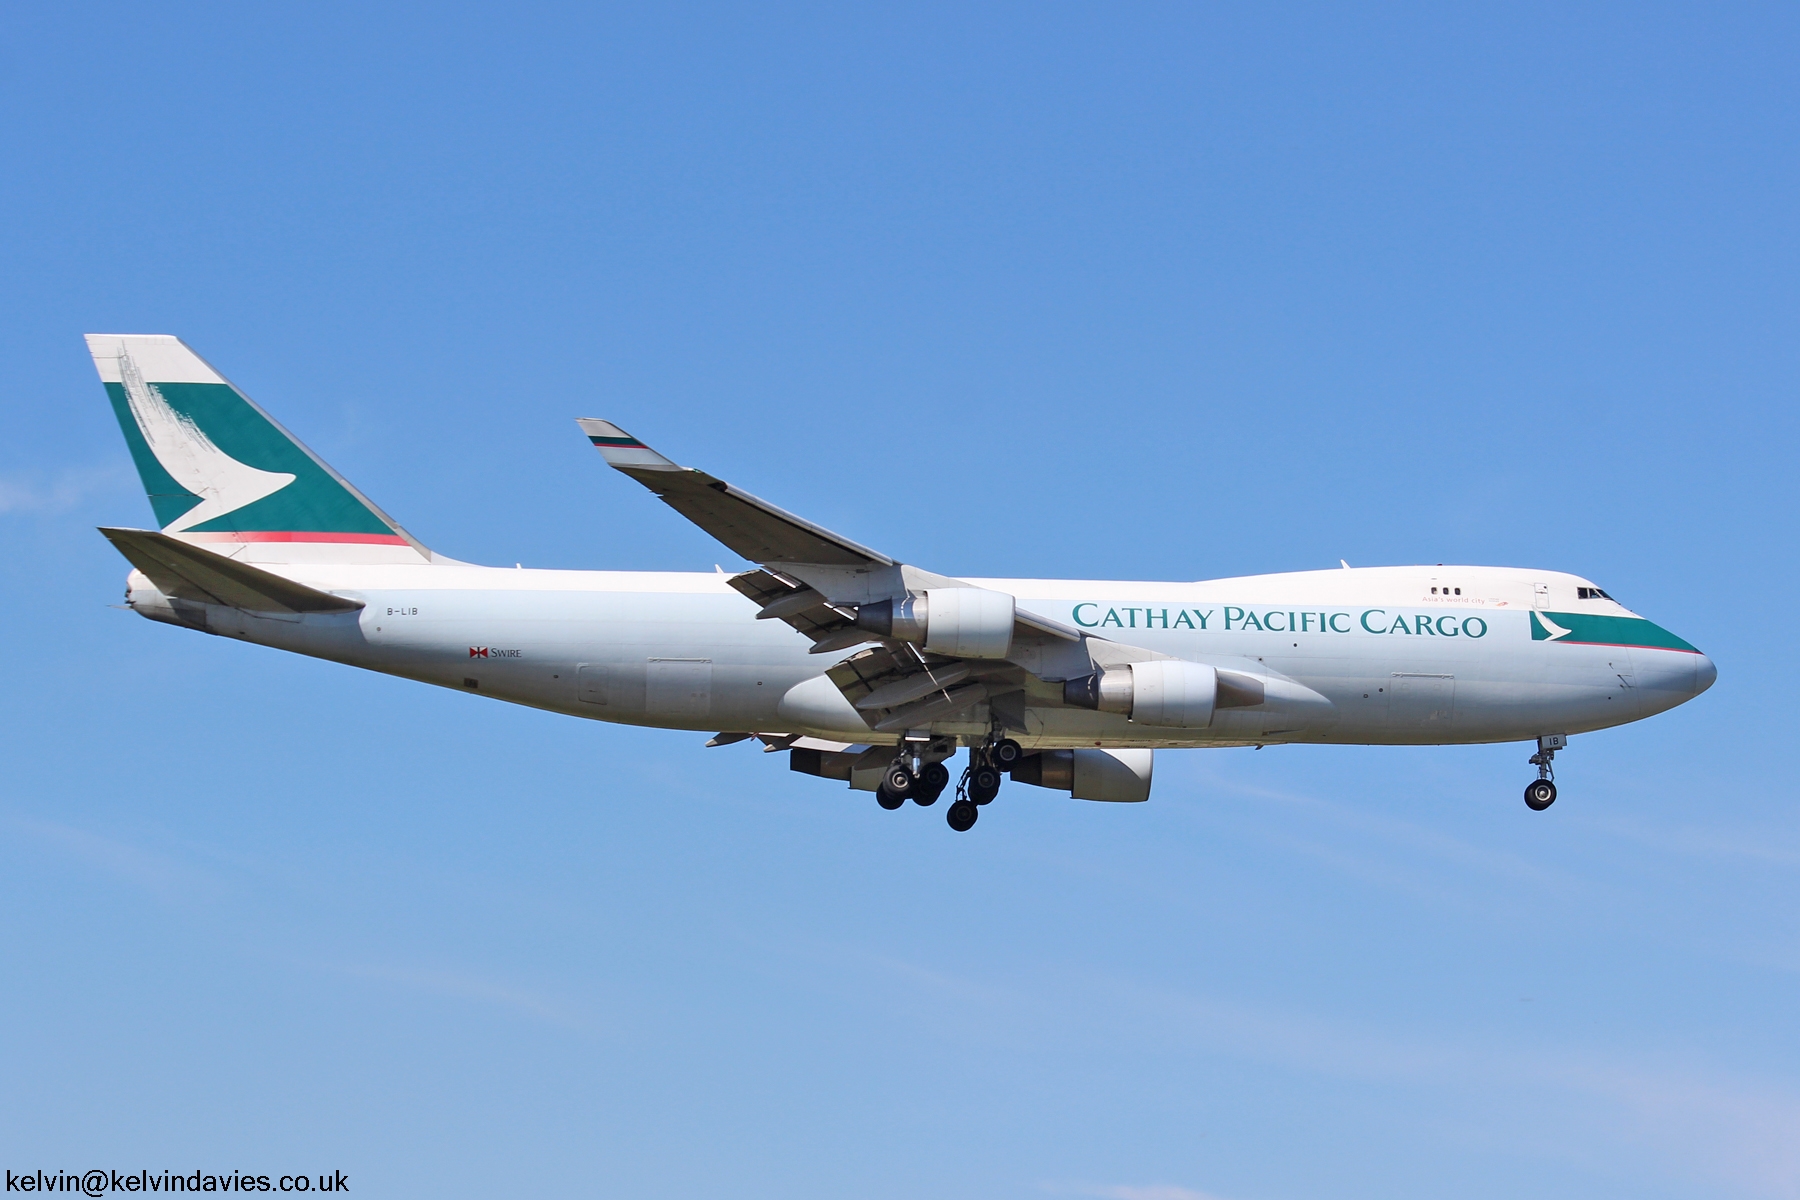 Cathay Pacific Airways 747 B-LIB